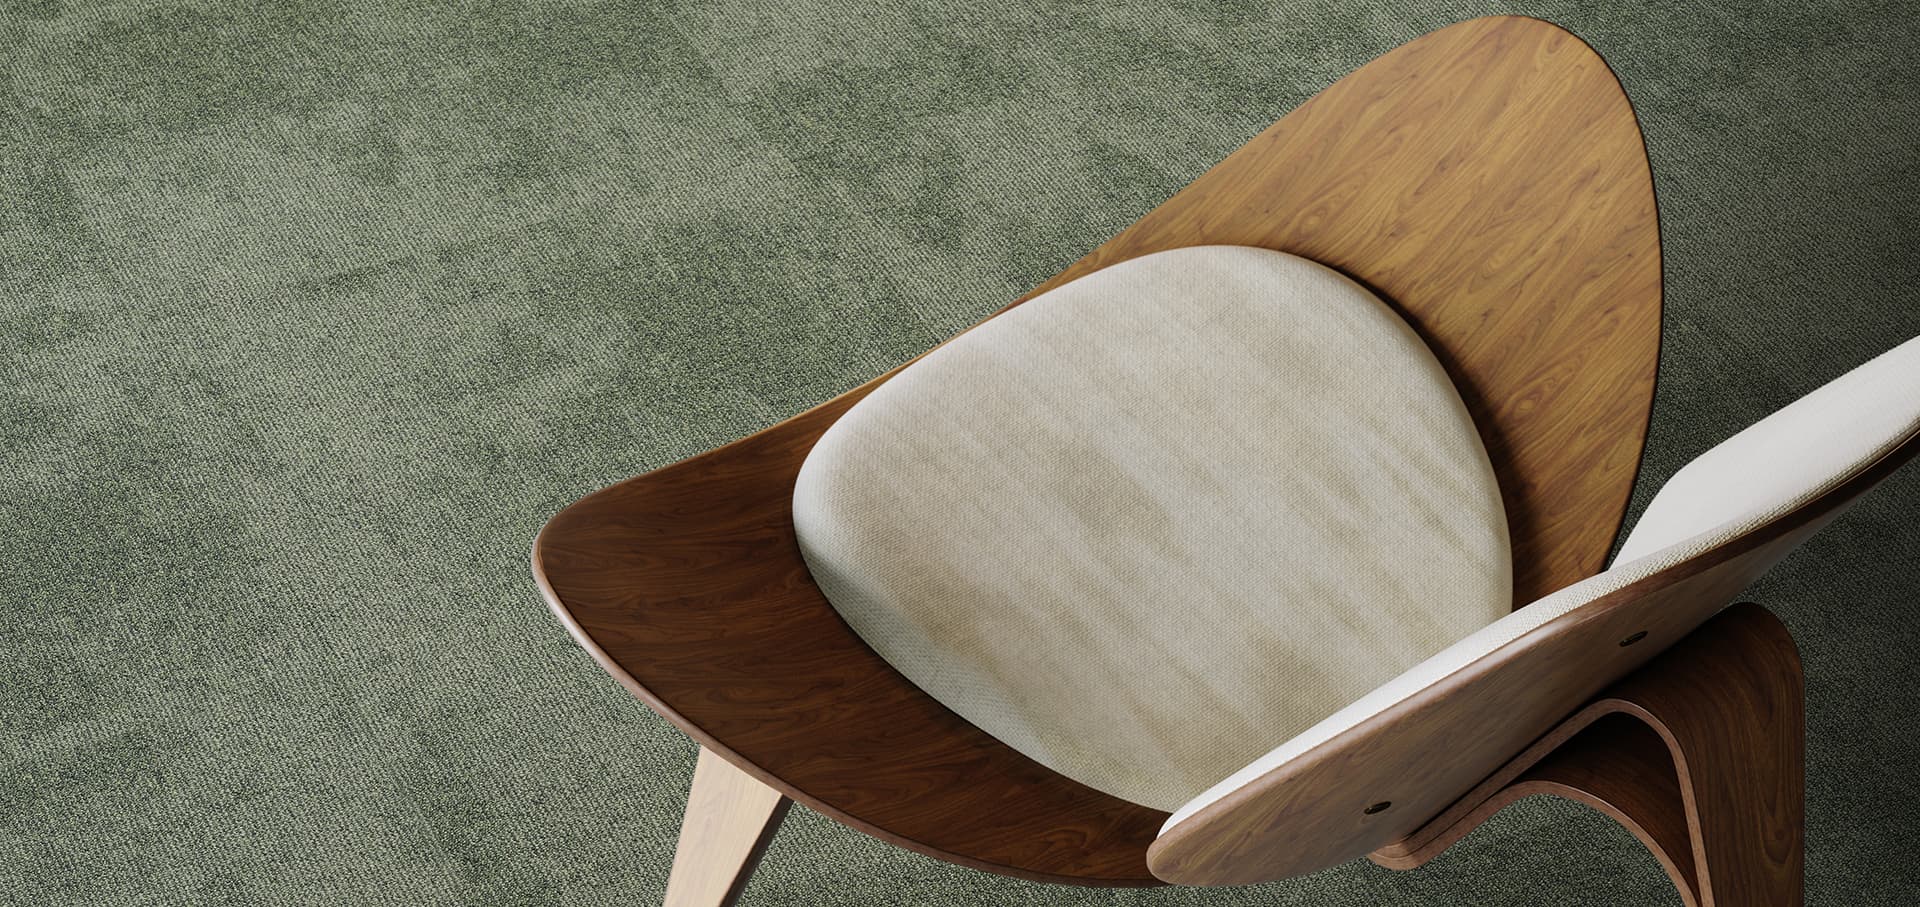 Carpet tile floor with a design chair